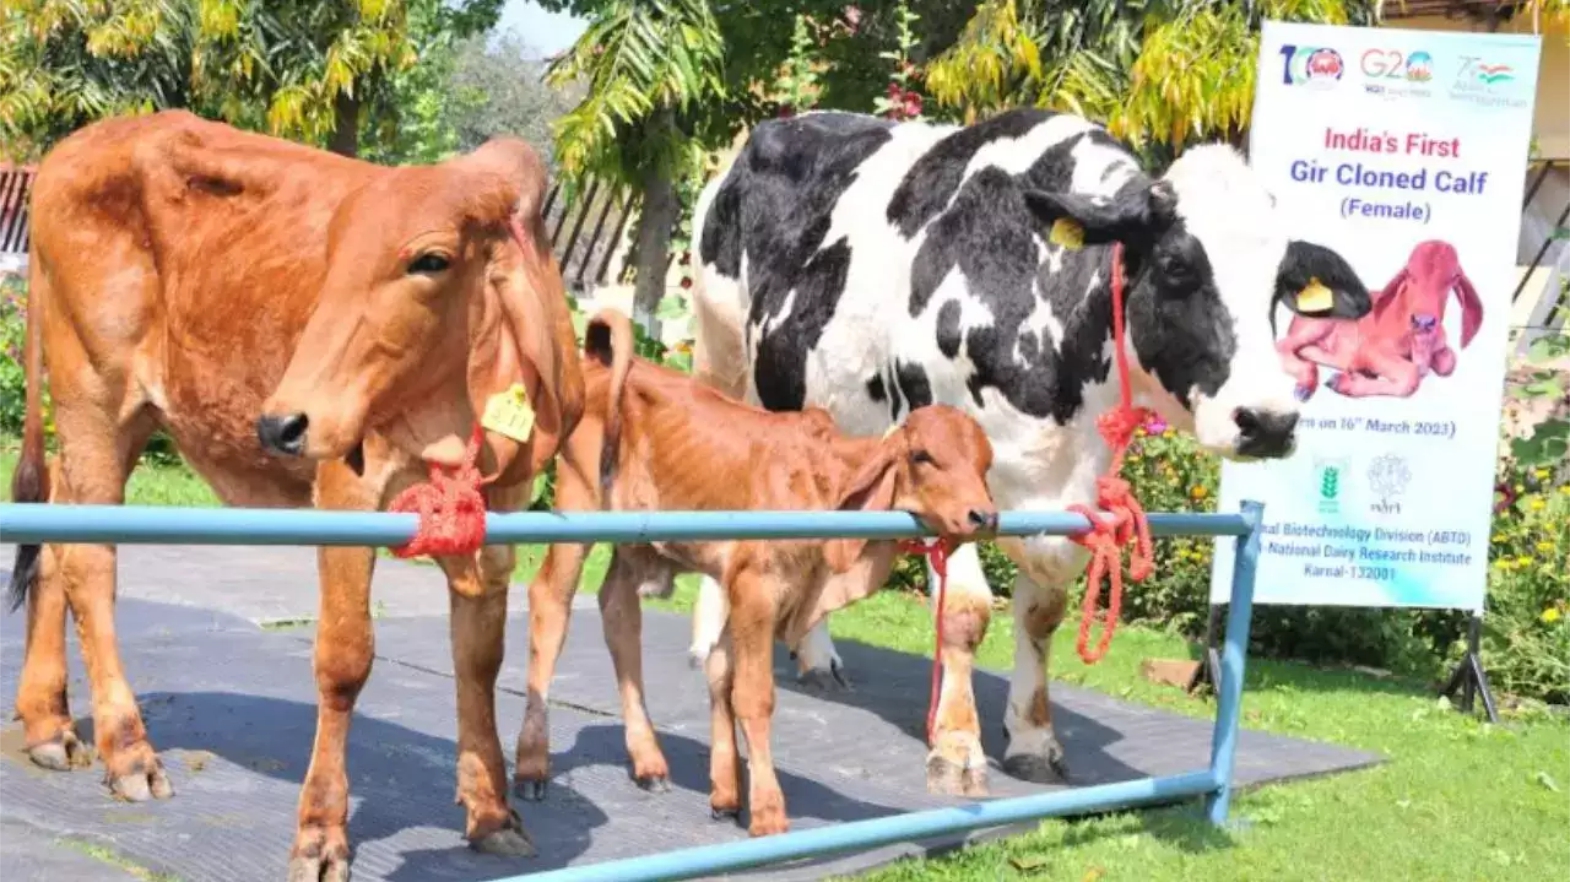 Clone Gir Cow In India : भारतातील पहिल्या क्लोन गीर गायीचा जन्म; वाचा सविस्तर प्रकरण